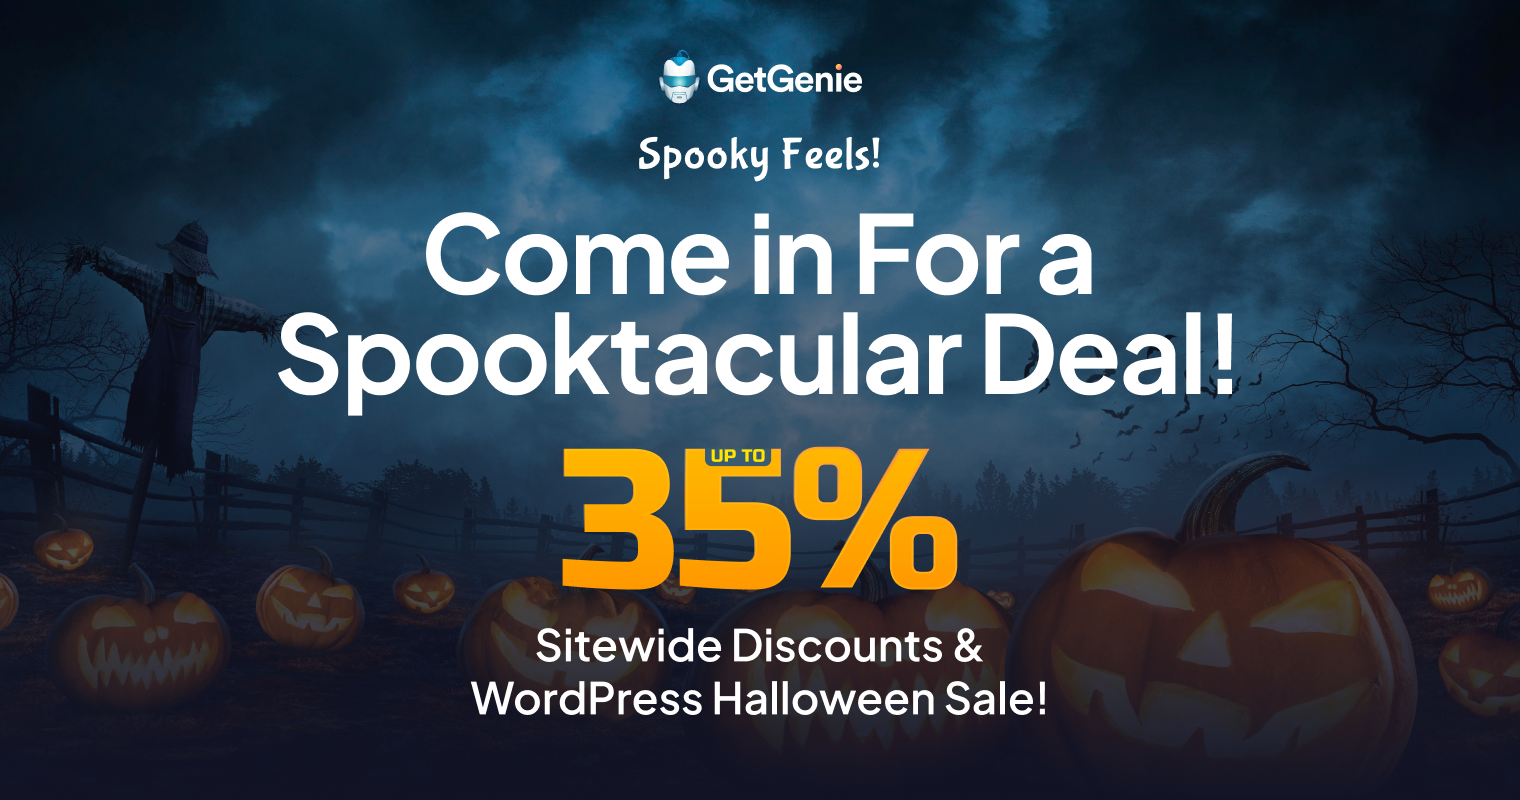 GetGenie_Halloween_deal